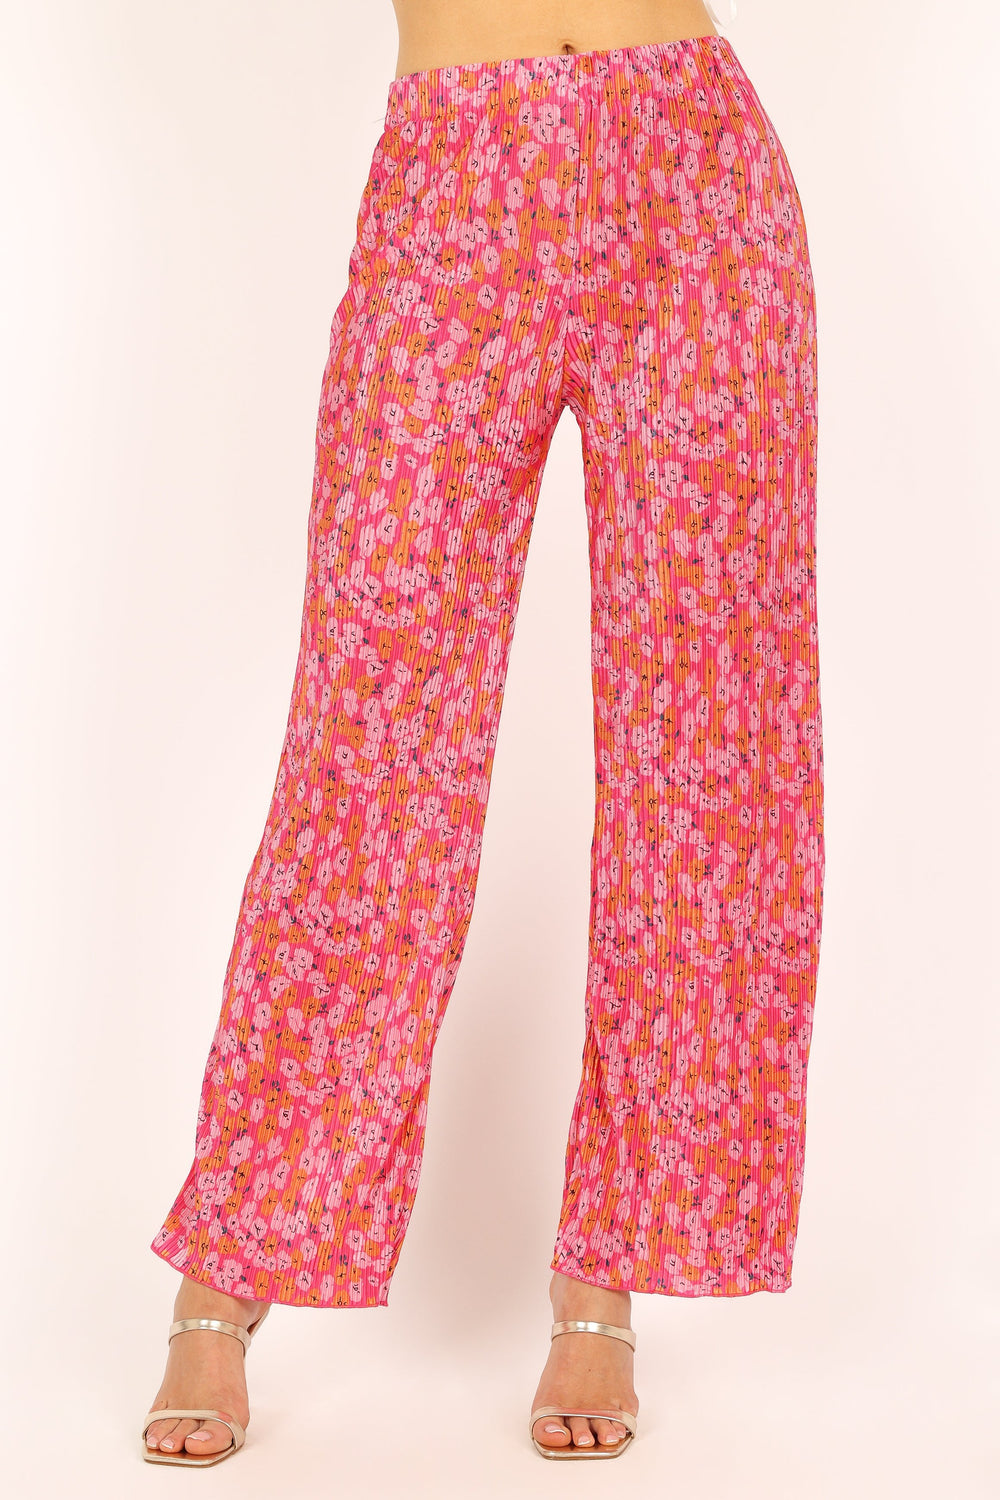 BOTTOMS Lulu Plisse Pants - Hot Pink